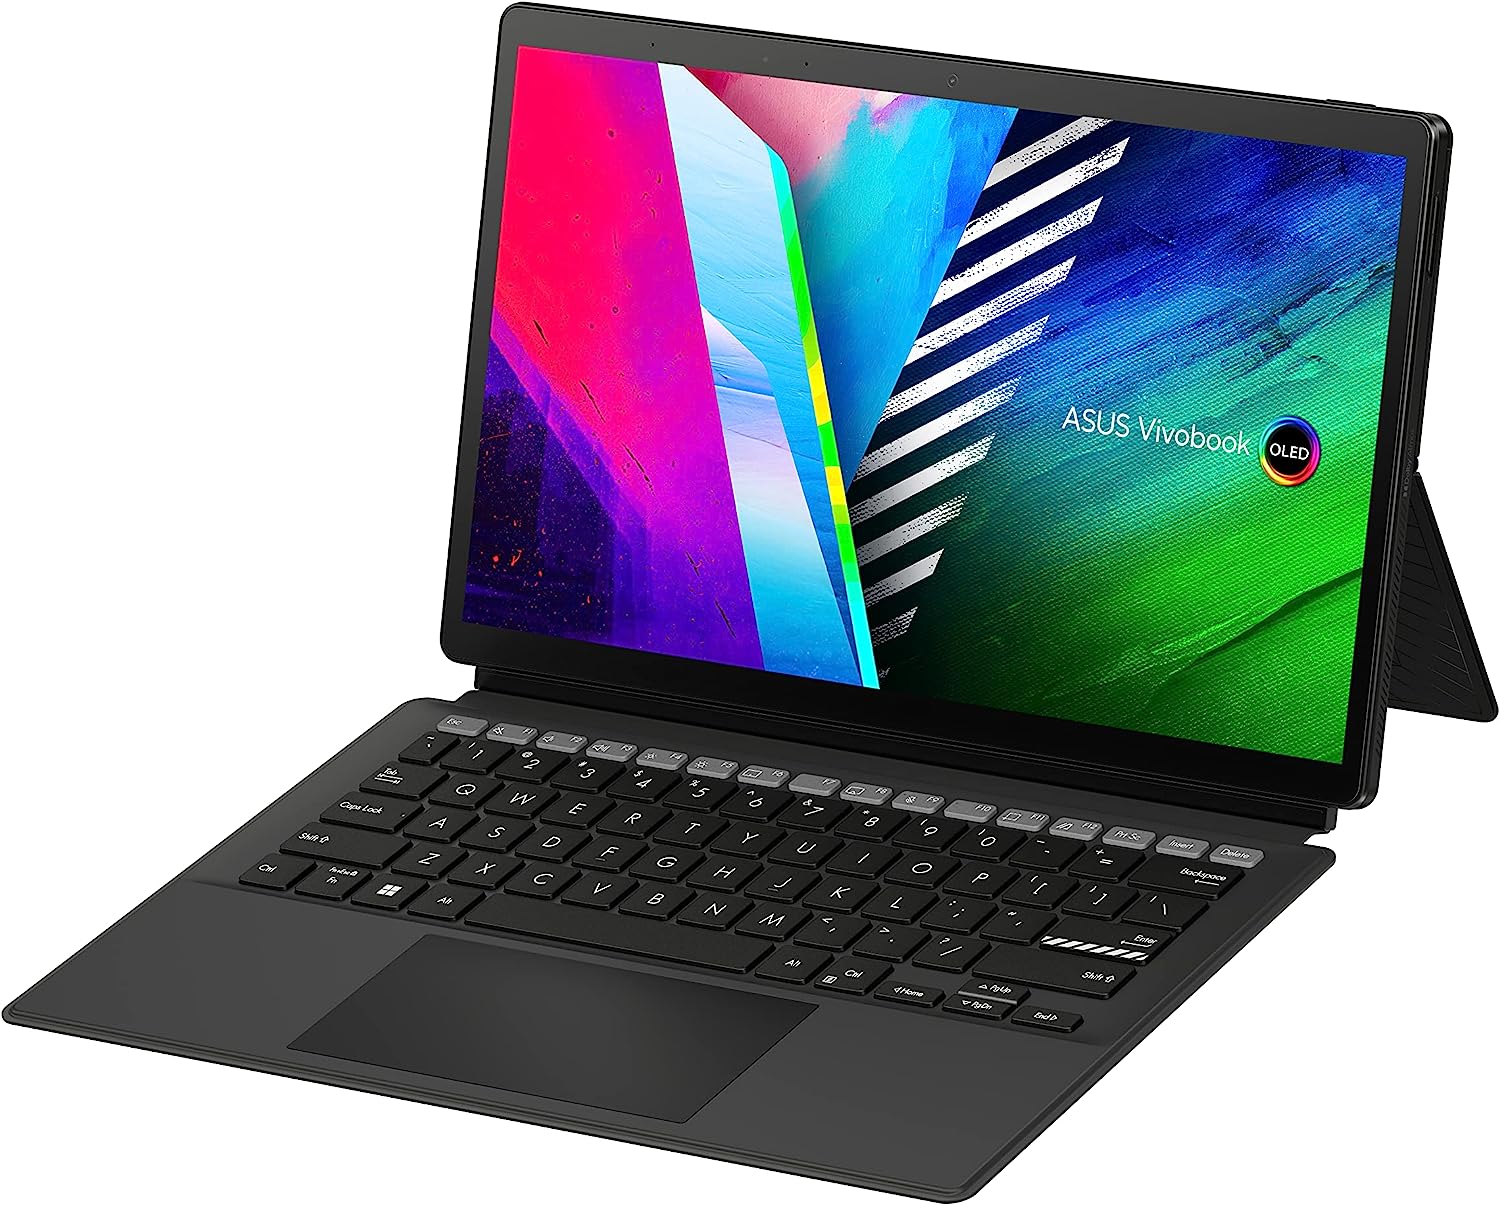 Asus VivoBook 13 Slate OLED 2-in-1 Laptop, 13.3” FHD OLED Touch Display, Intel Pentium N6000 Quad-Core CPU, 4GB RAM, 128GB eMMC, Windows 11 Home in S Mode, Black, T3300KA-DH21T